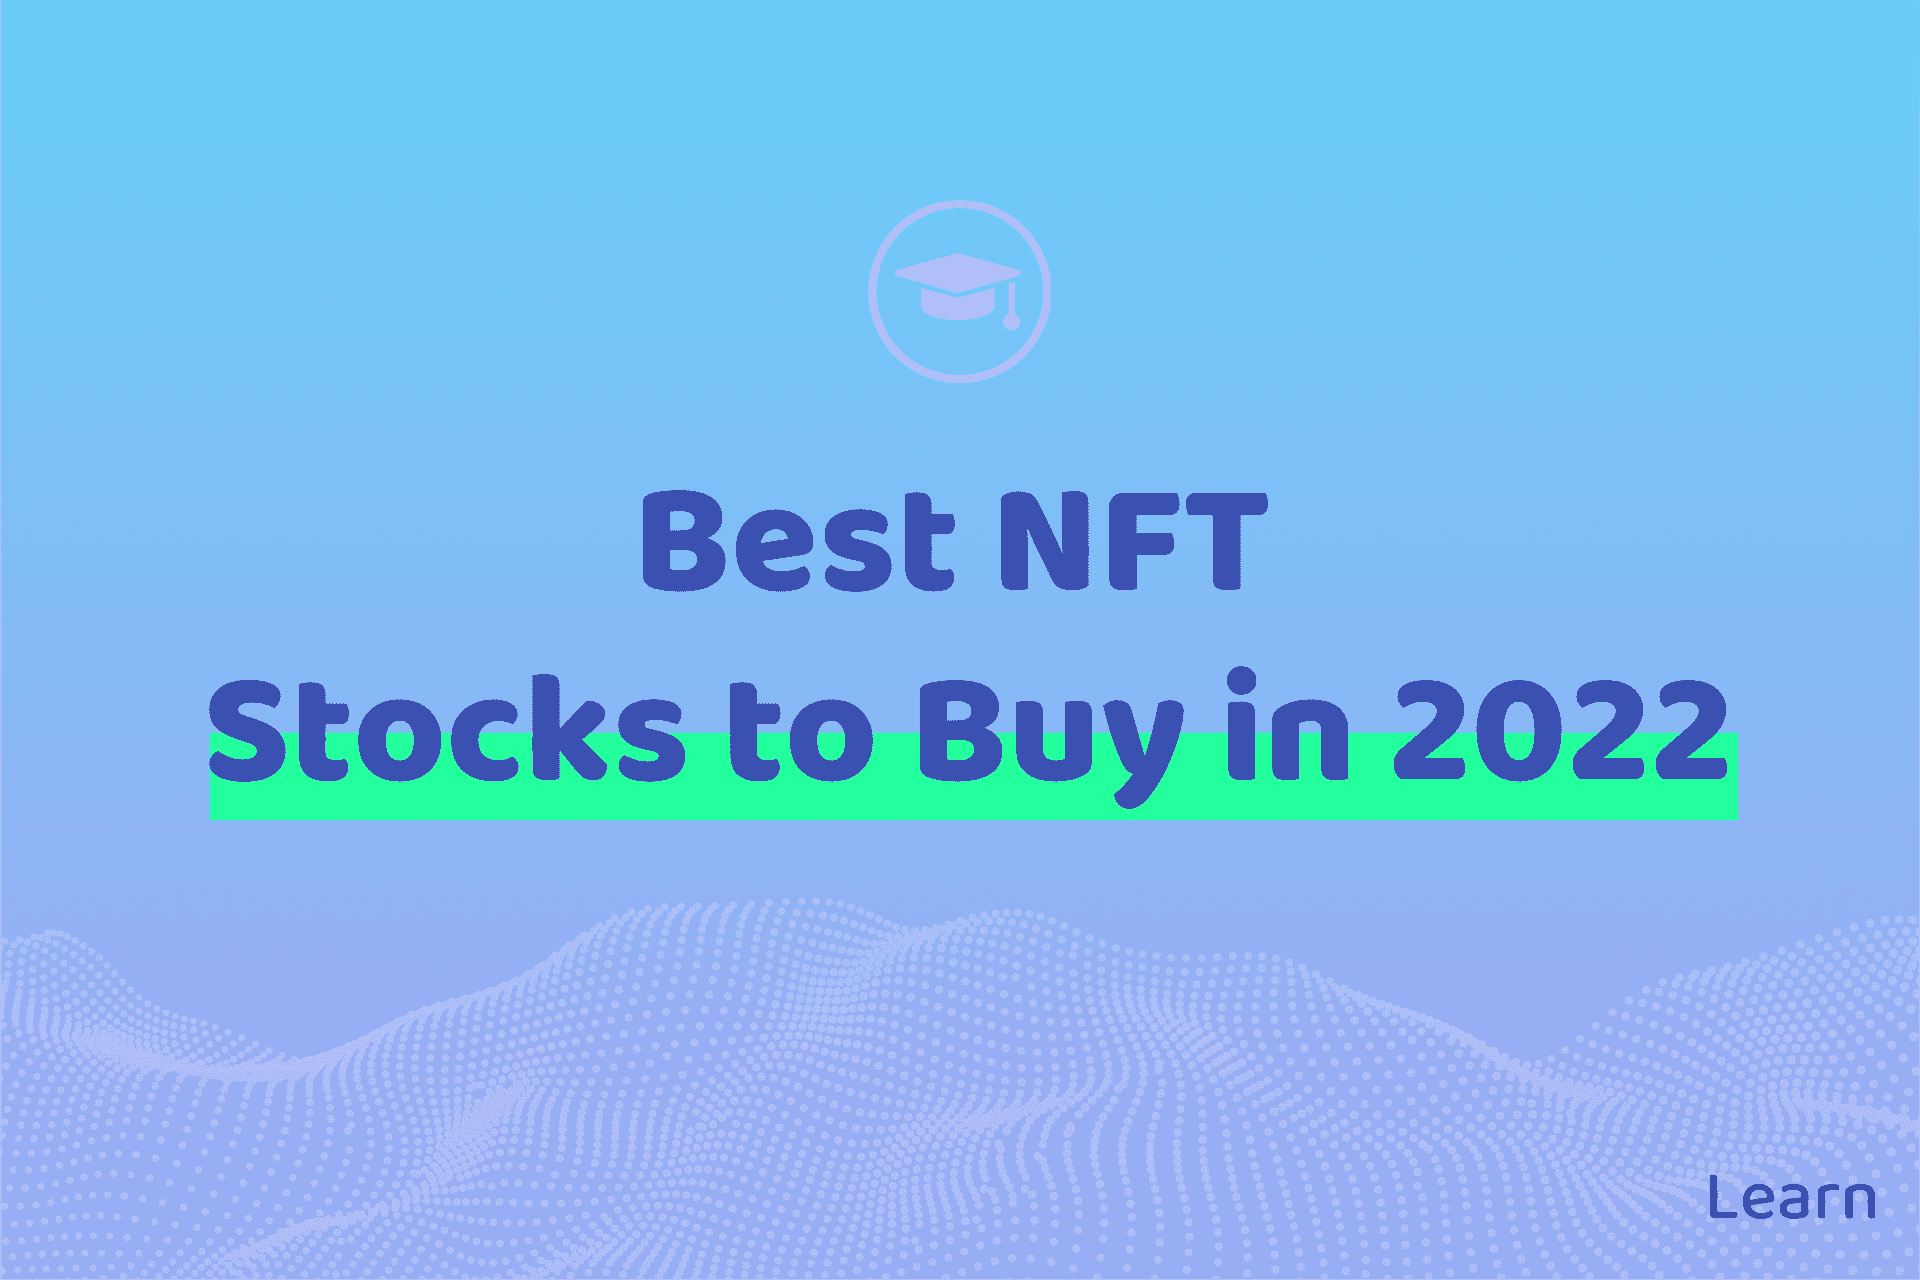 Best NFT Stocks to Buy in 2022